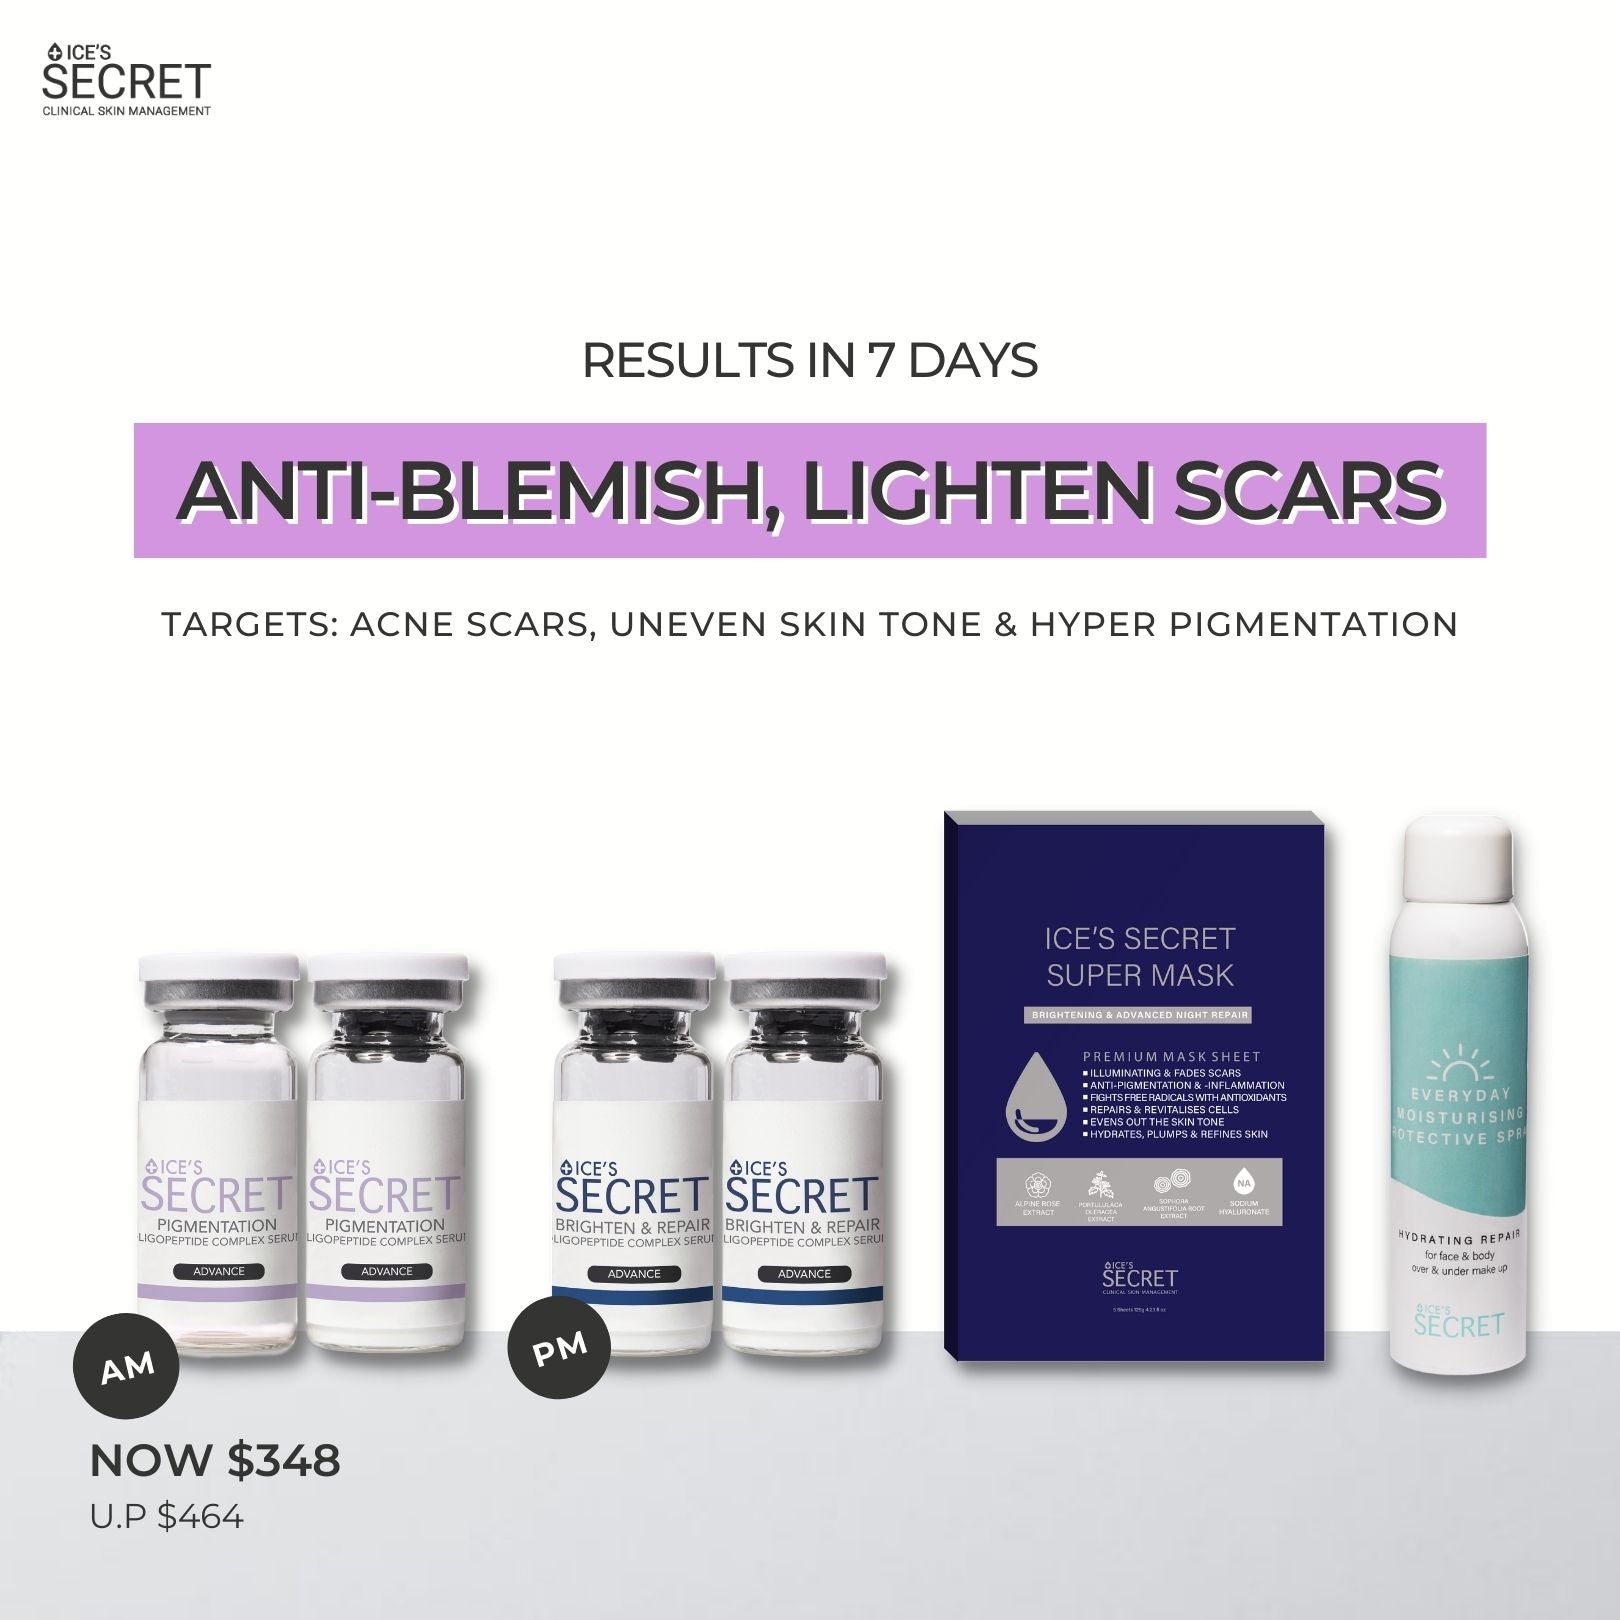 Anti-Blemish, Lighten Scars Kit